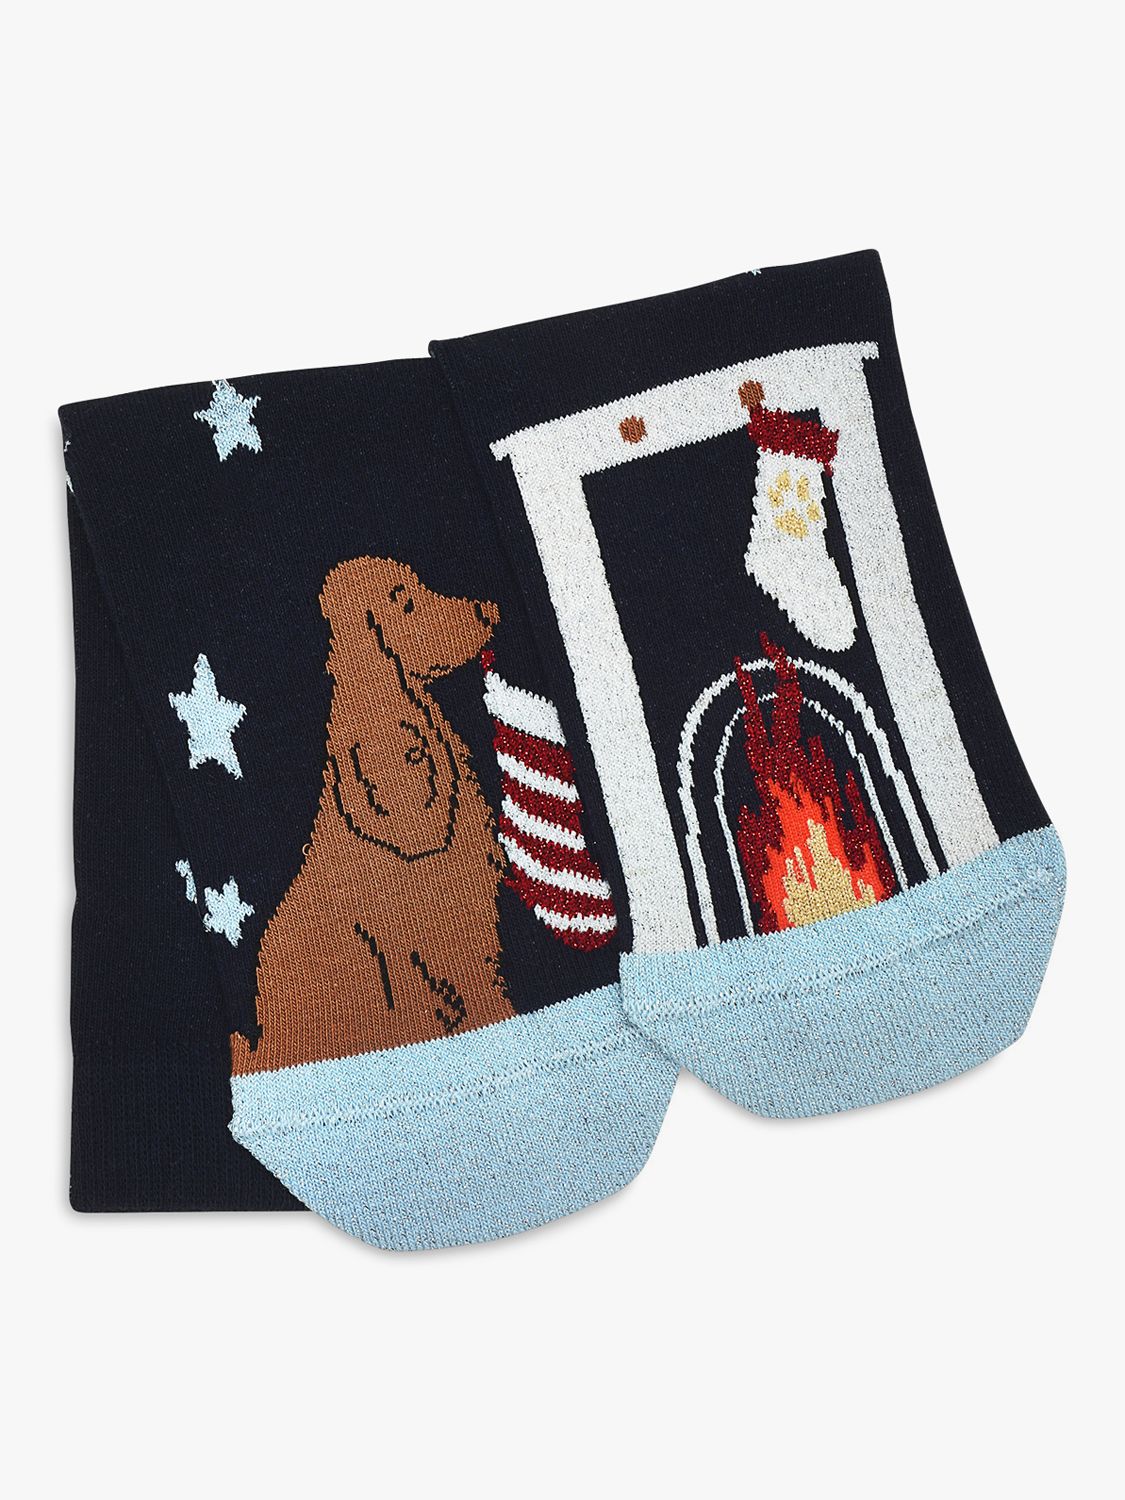 Radley Christmas Dog Socks, £8